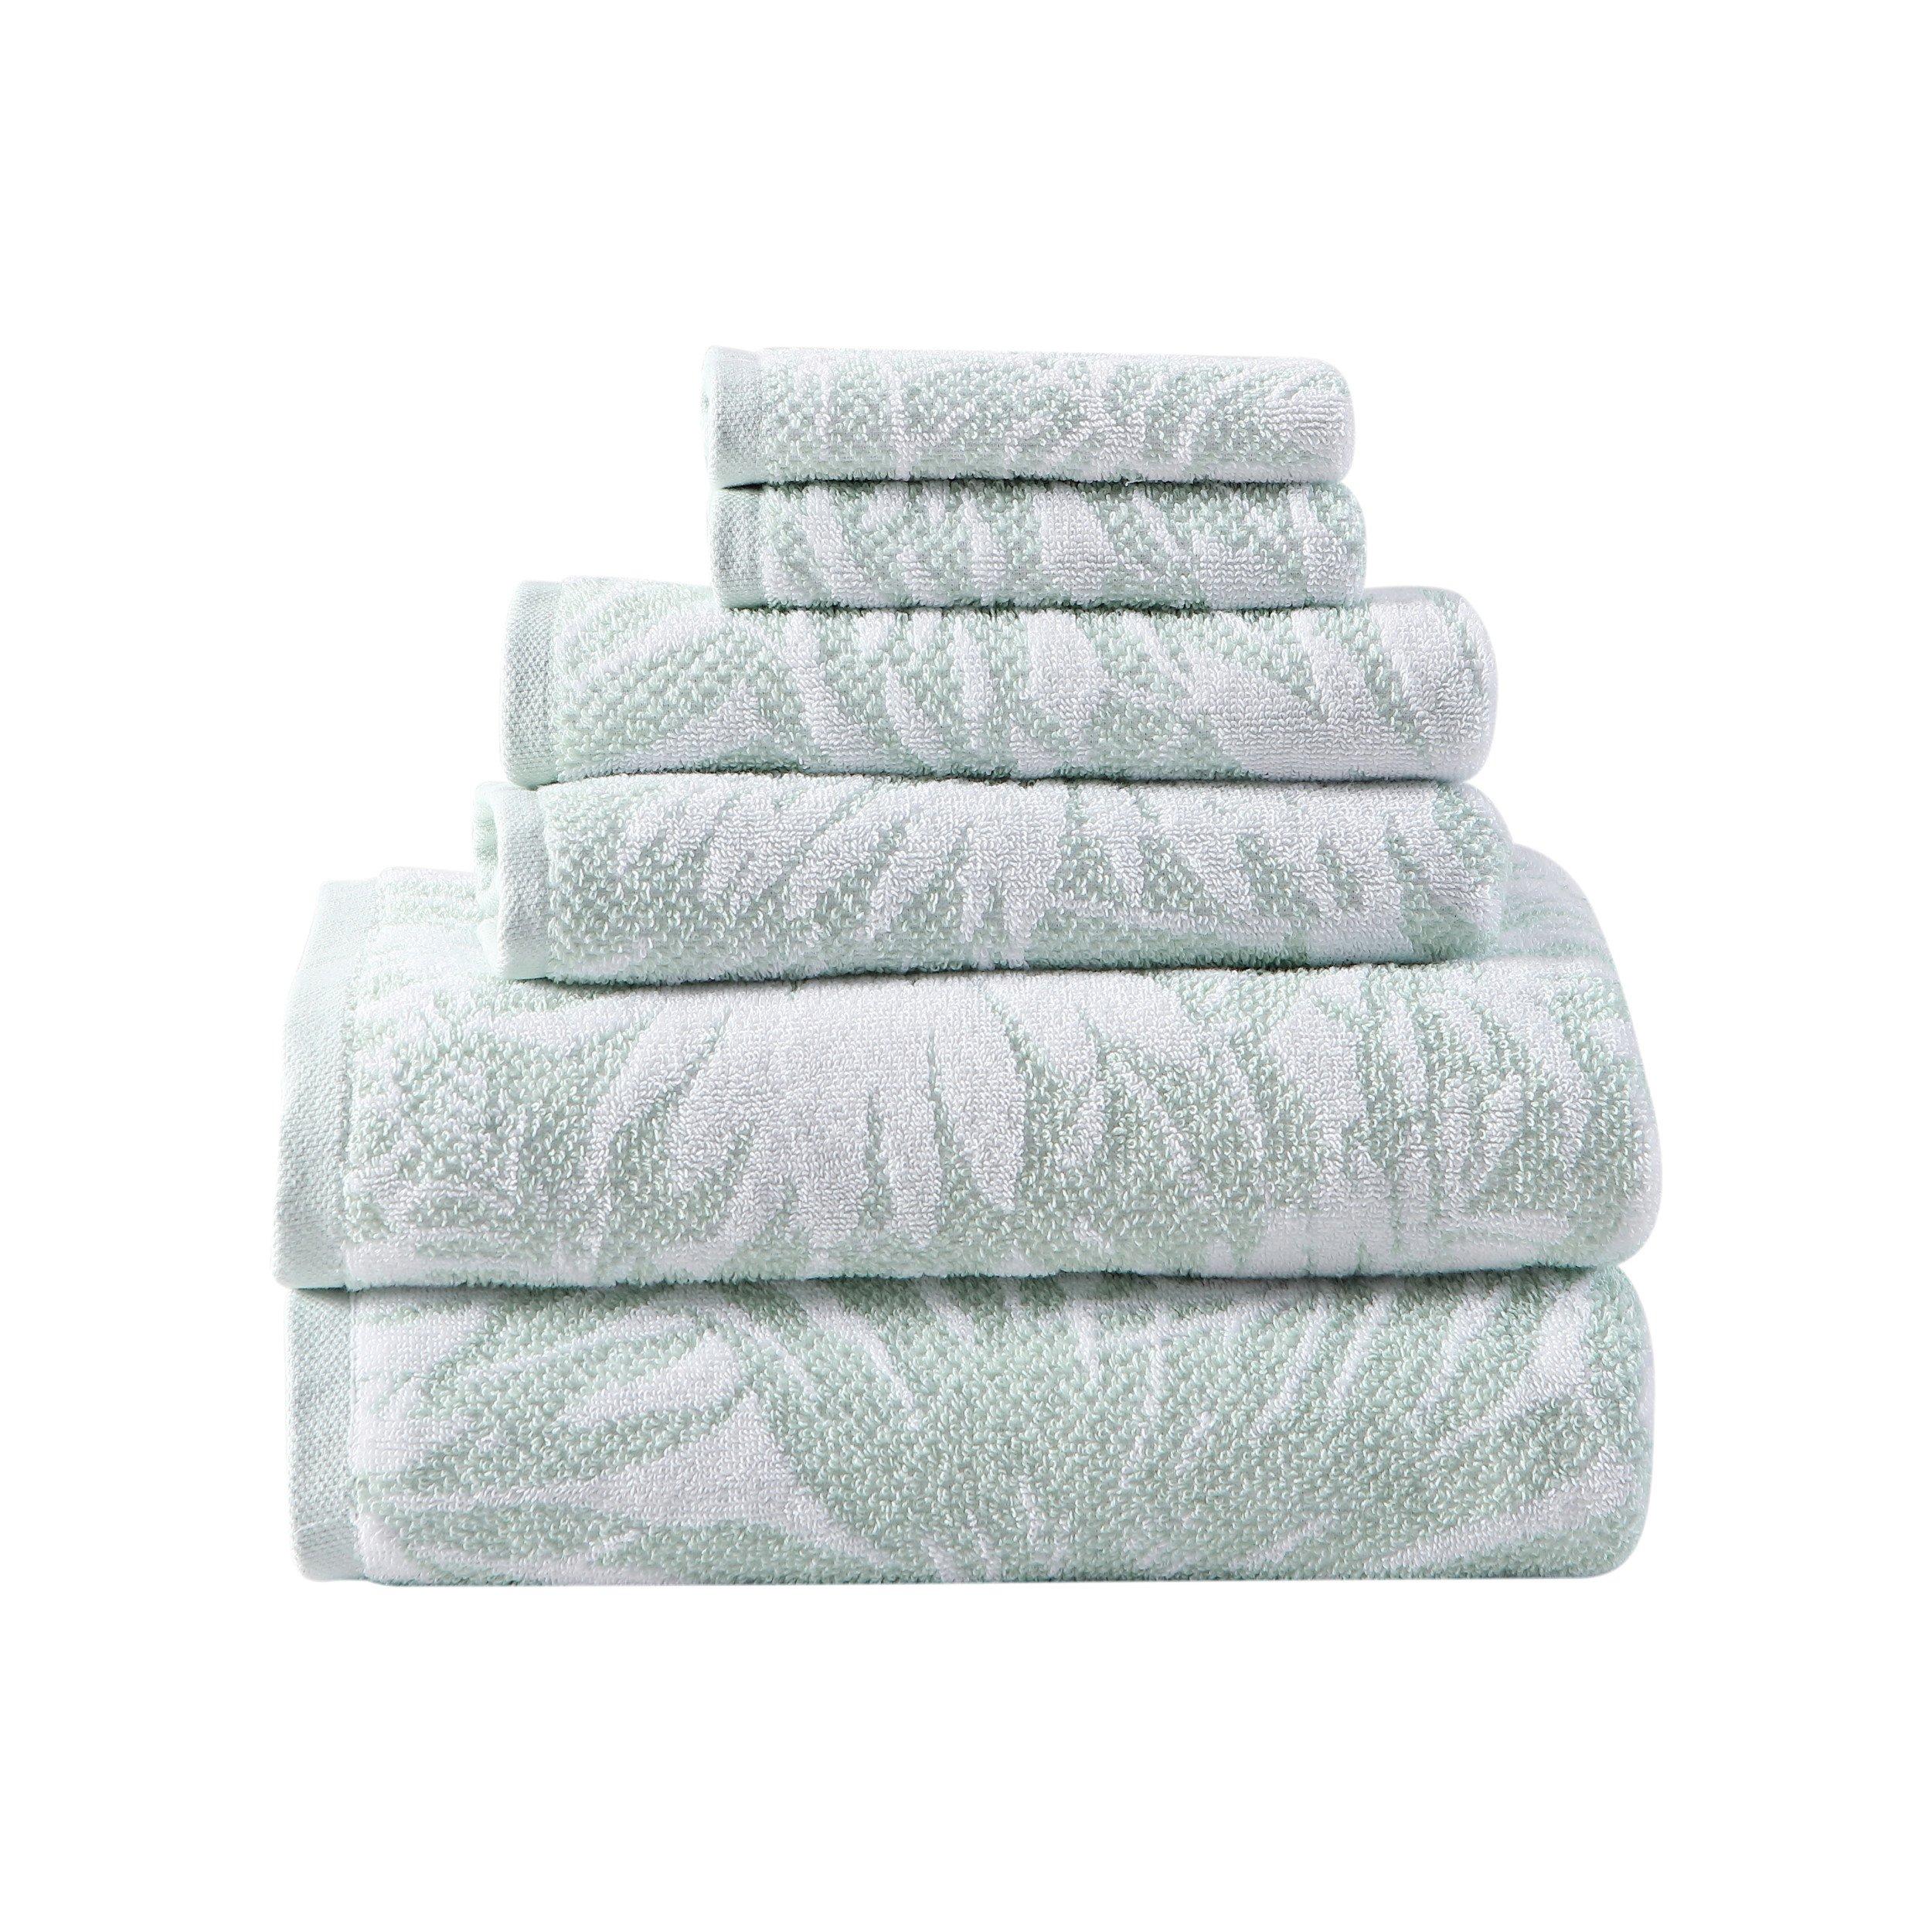 https://images.beallsflorida.com/i/beallsflorida/441-2450-1952-30-yyy/*Lago-Palm-6-Piece-Cotton-Terry-Towel-Set*?$product$&fmt=auto&qlt=default